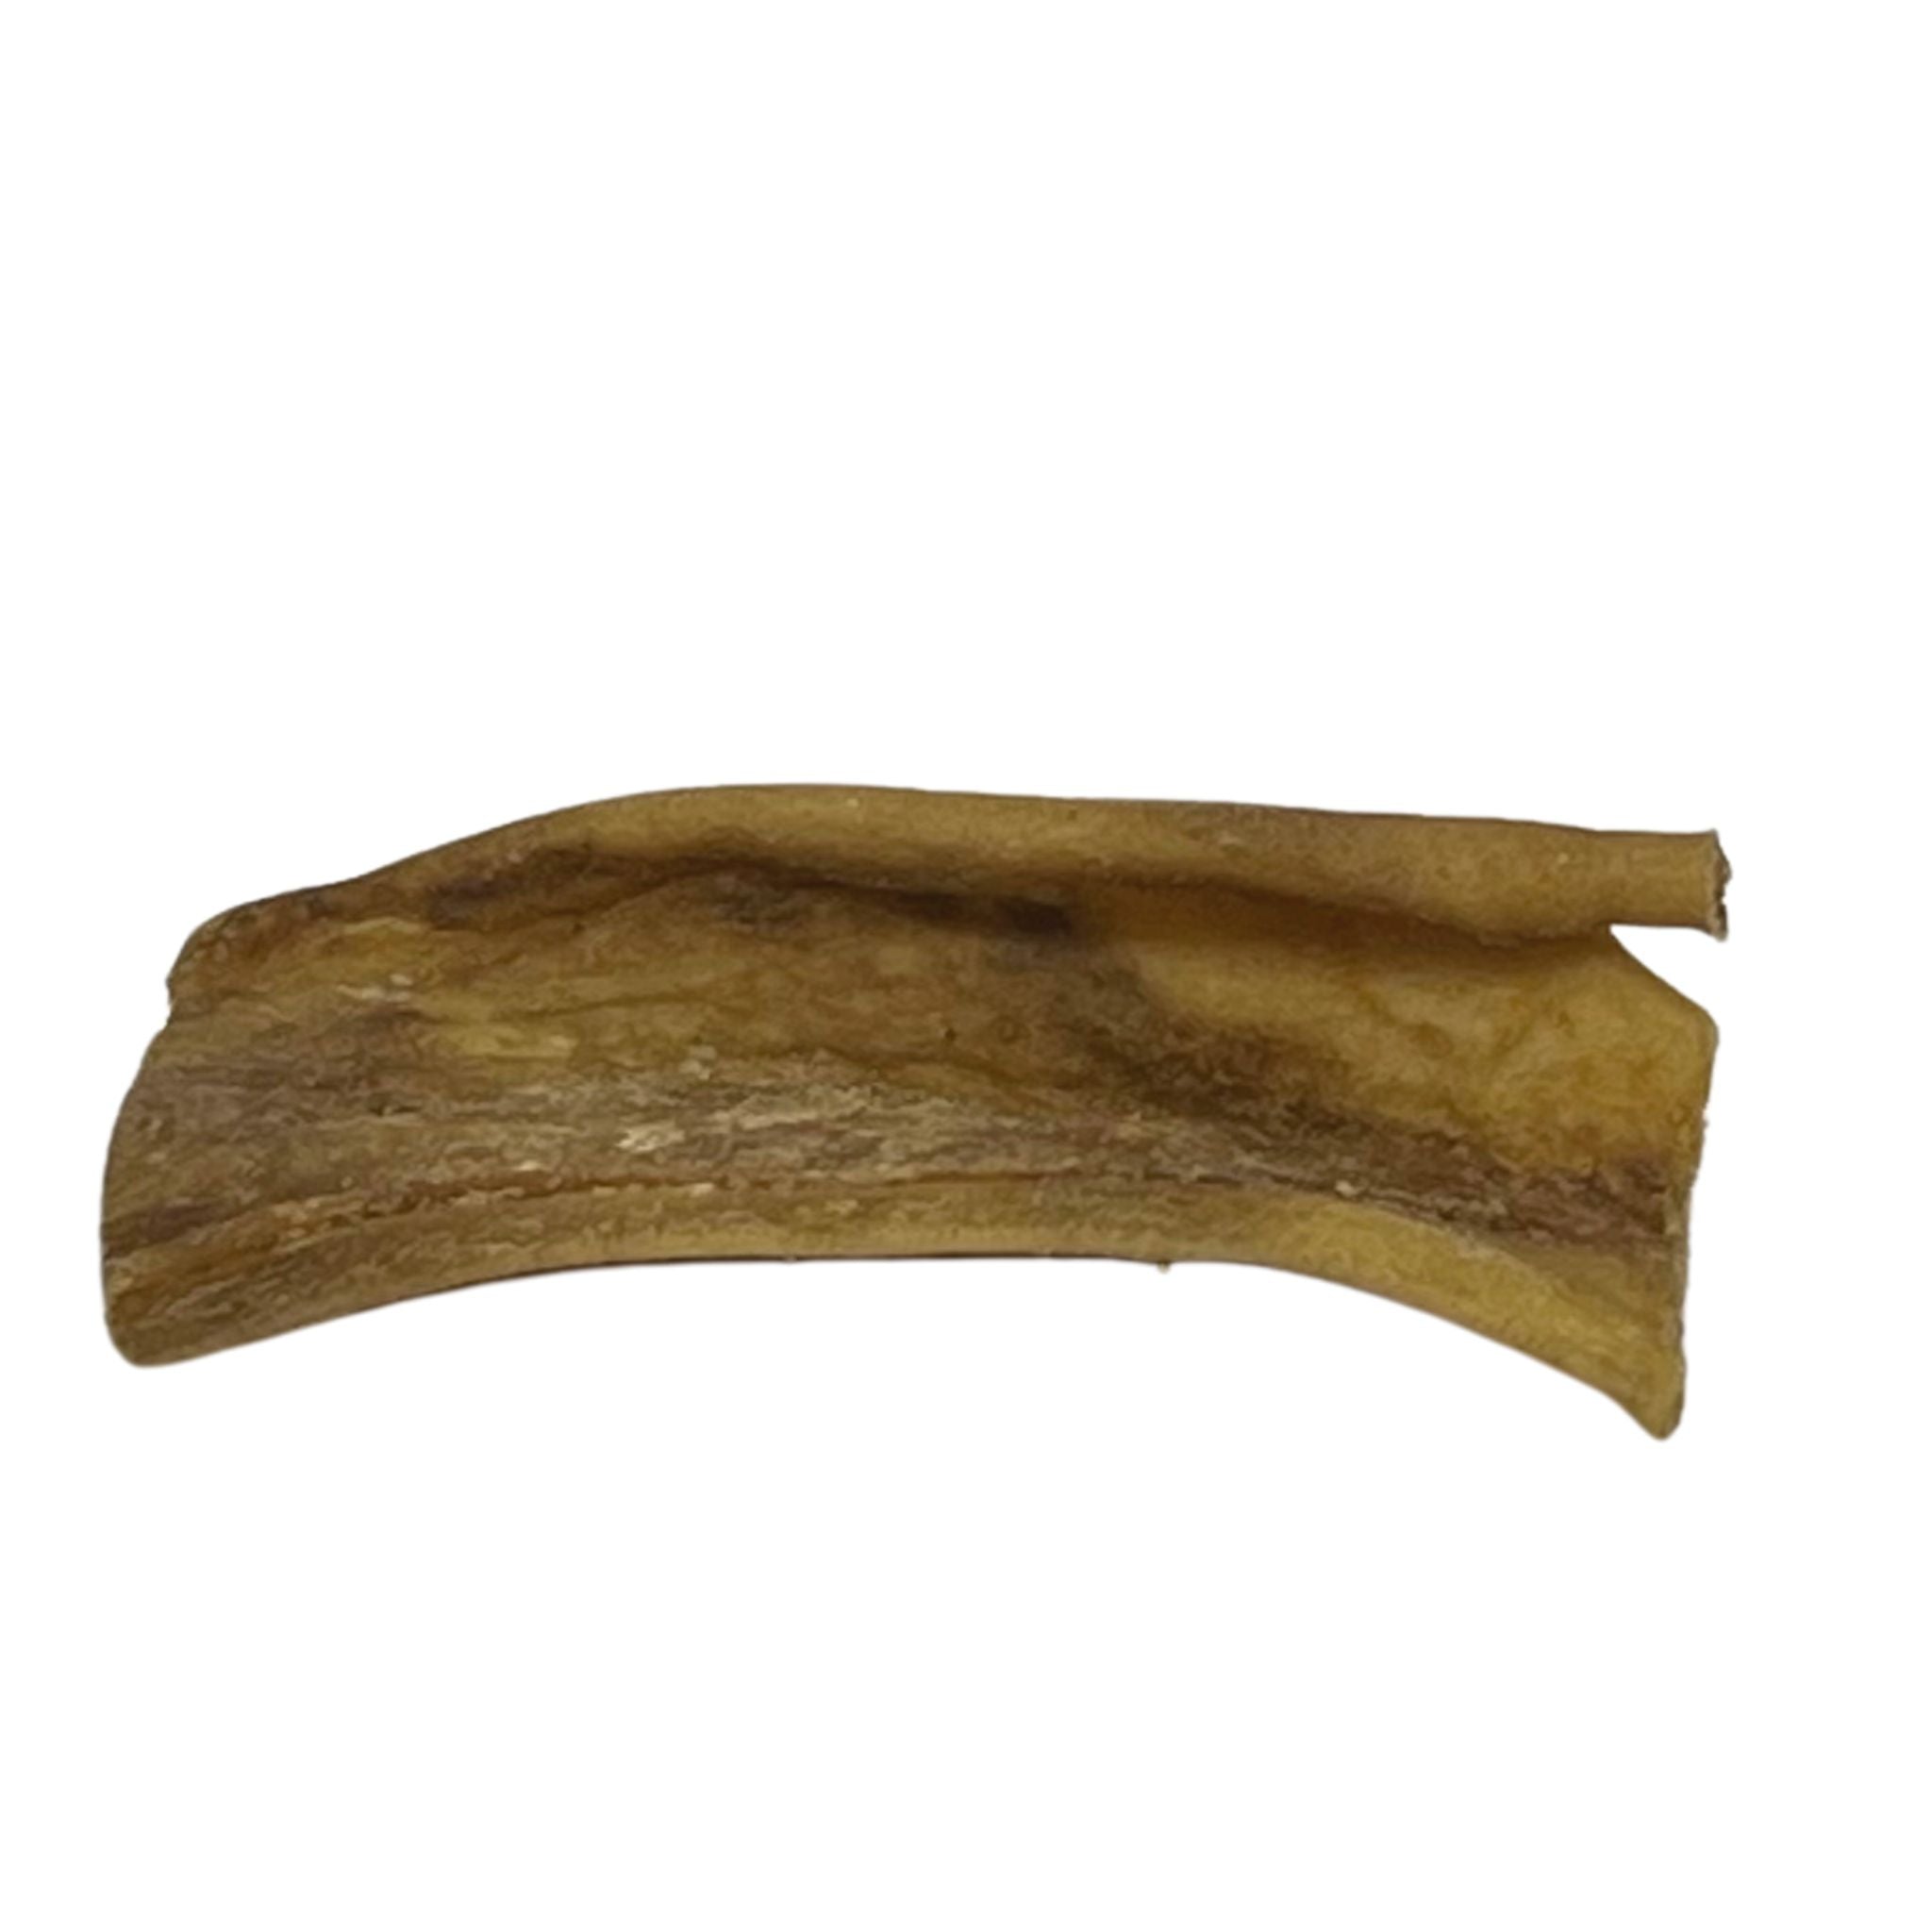 Buffalo Skin Slices - Chewbox Natural Dog Chew - Grain & Gluten Free